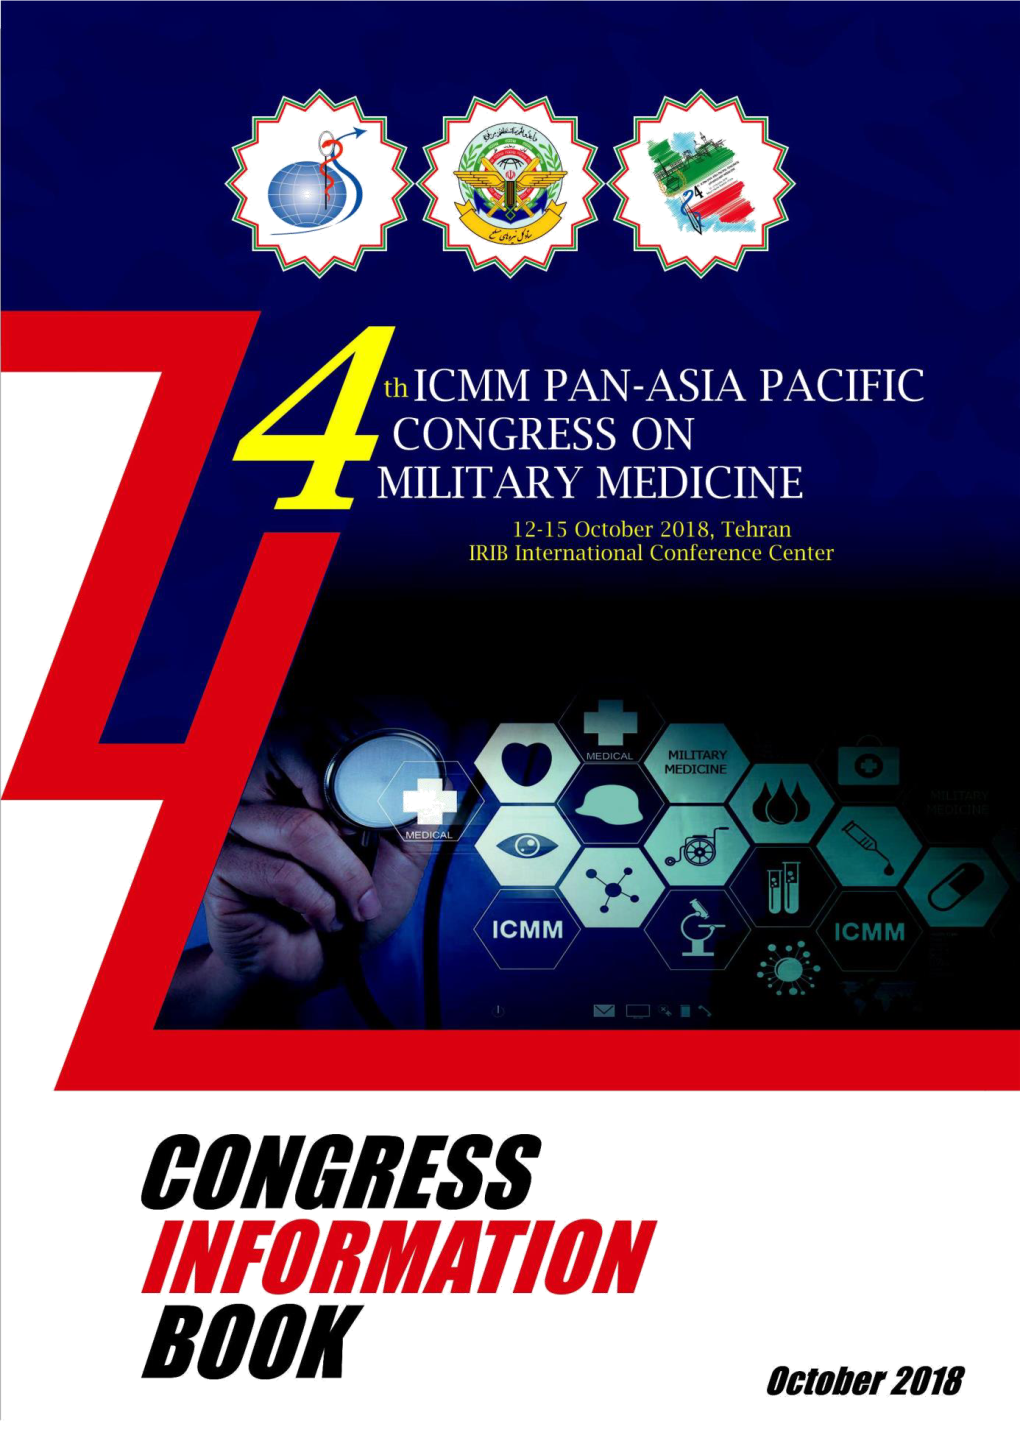 Congress Information Book